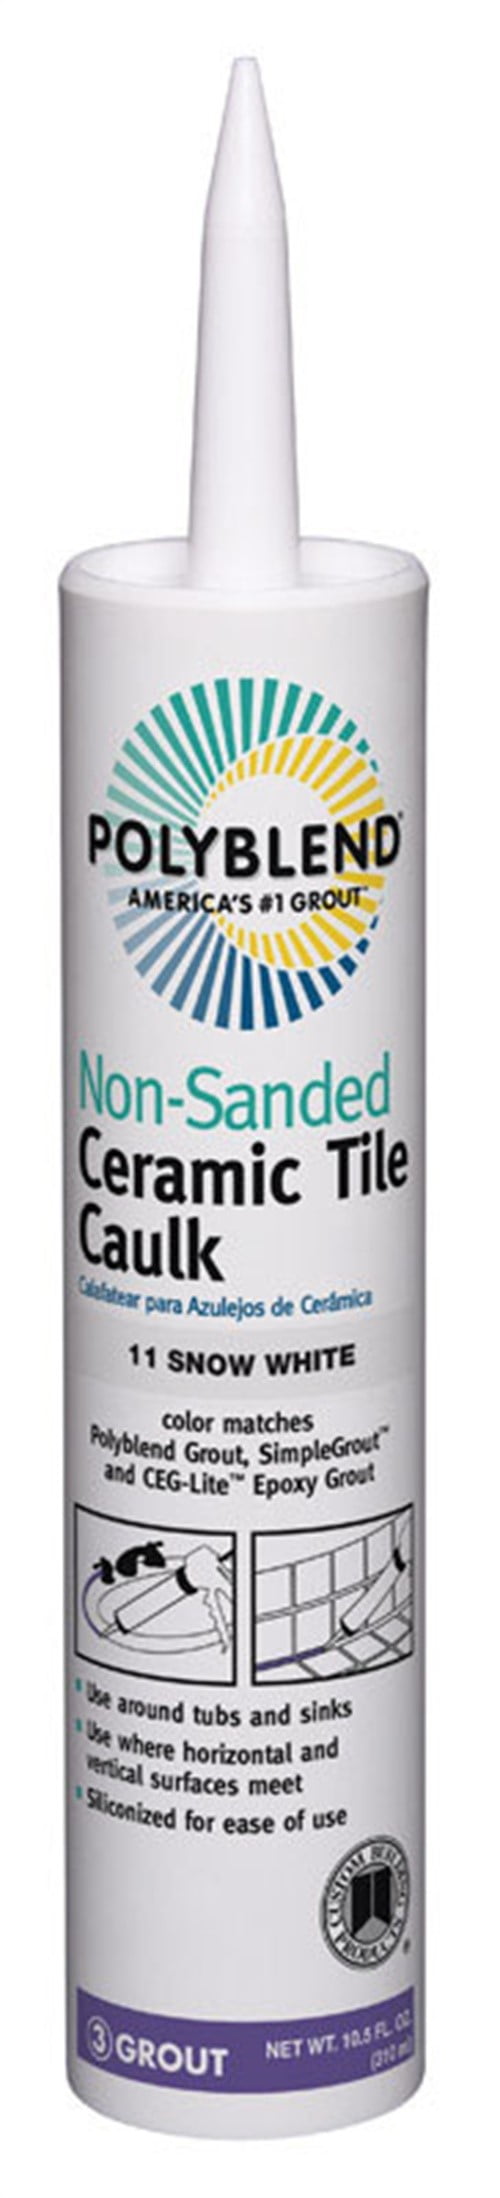 Polyblend Pc1110n 6 10 5 Oz Tile Caulk, How To Apply Ceramic Tile Caulk